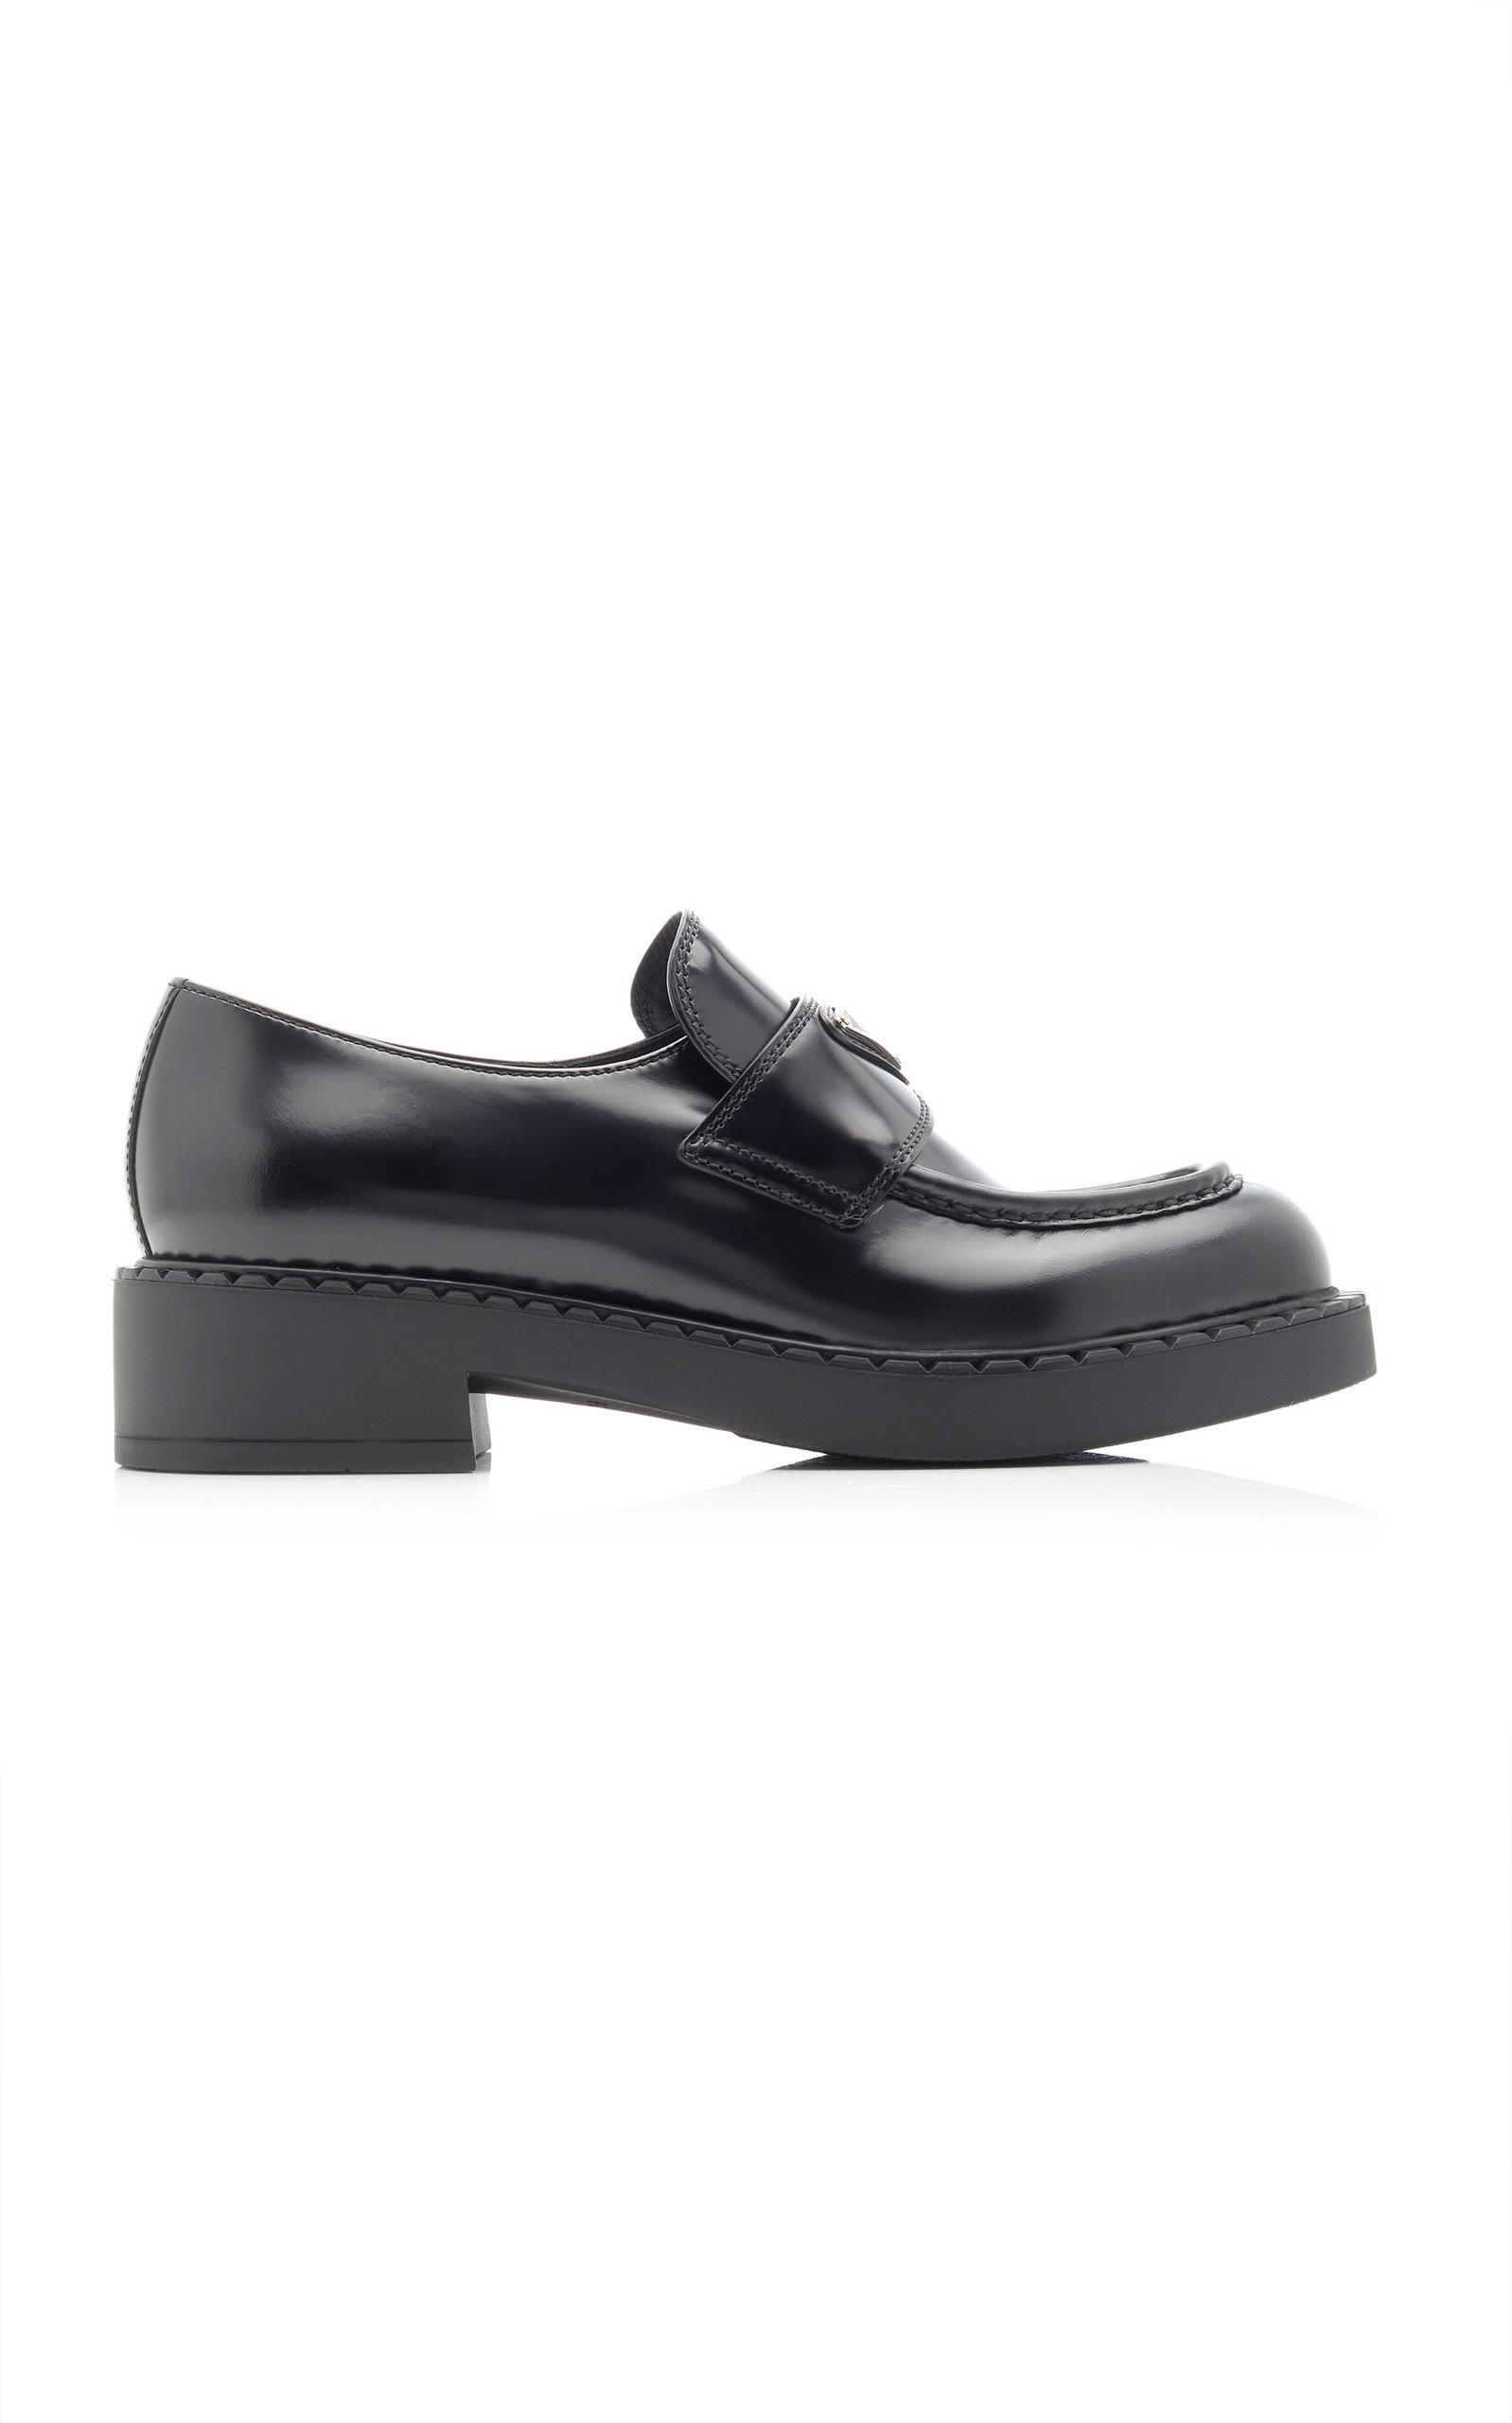 Prada - Women's Leather Loafers  - Black - Moda Operandi